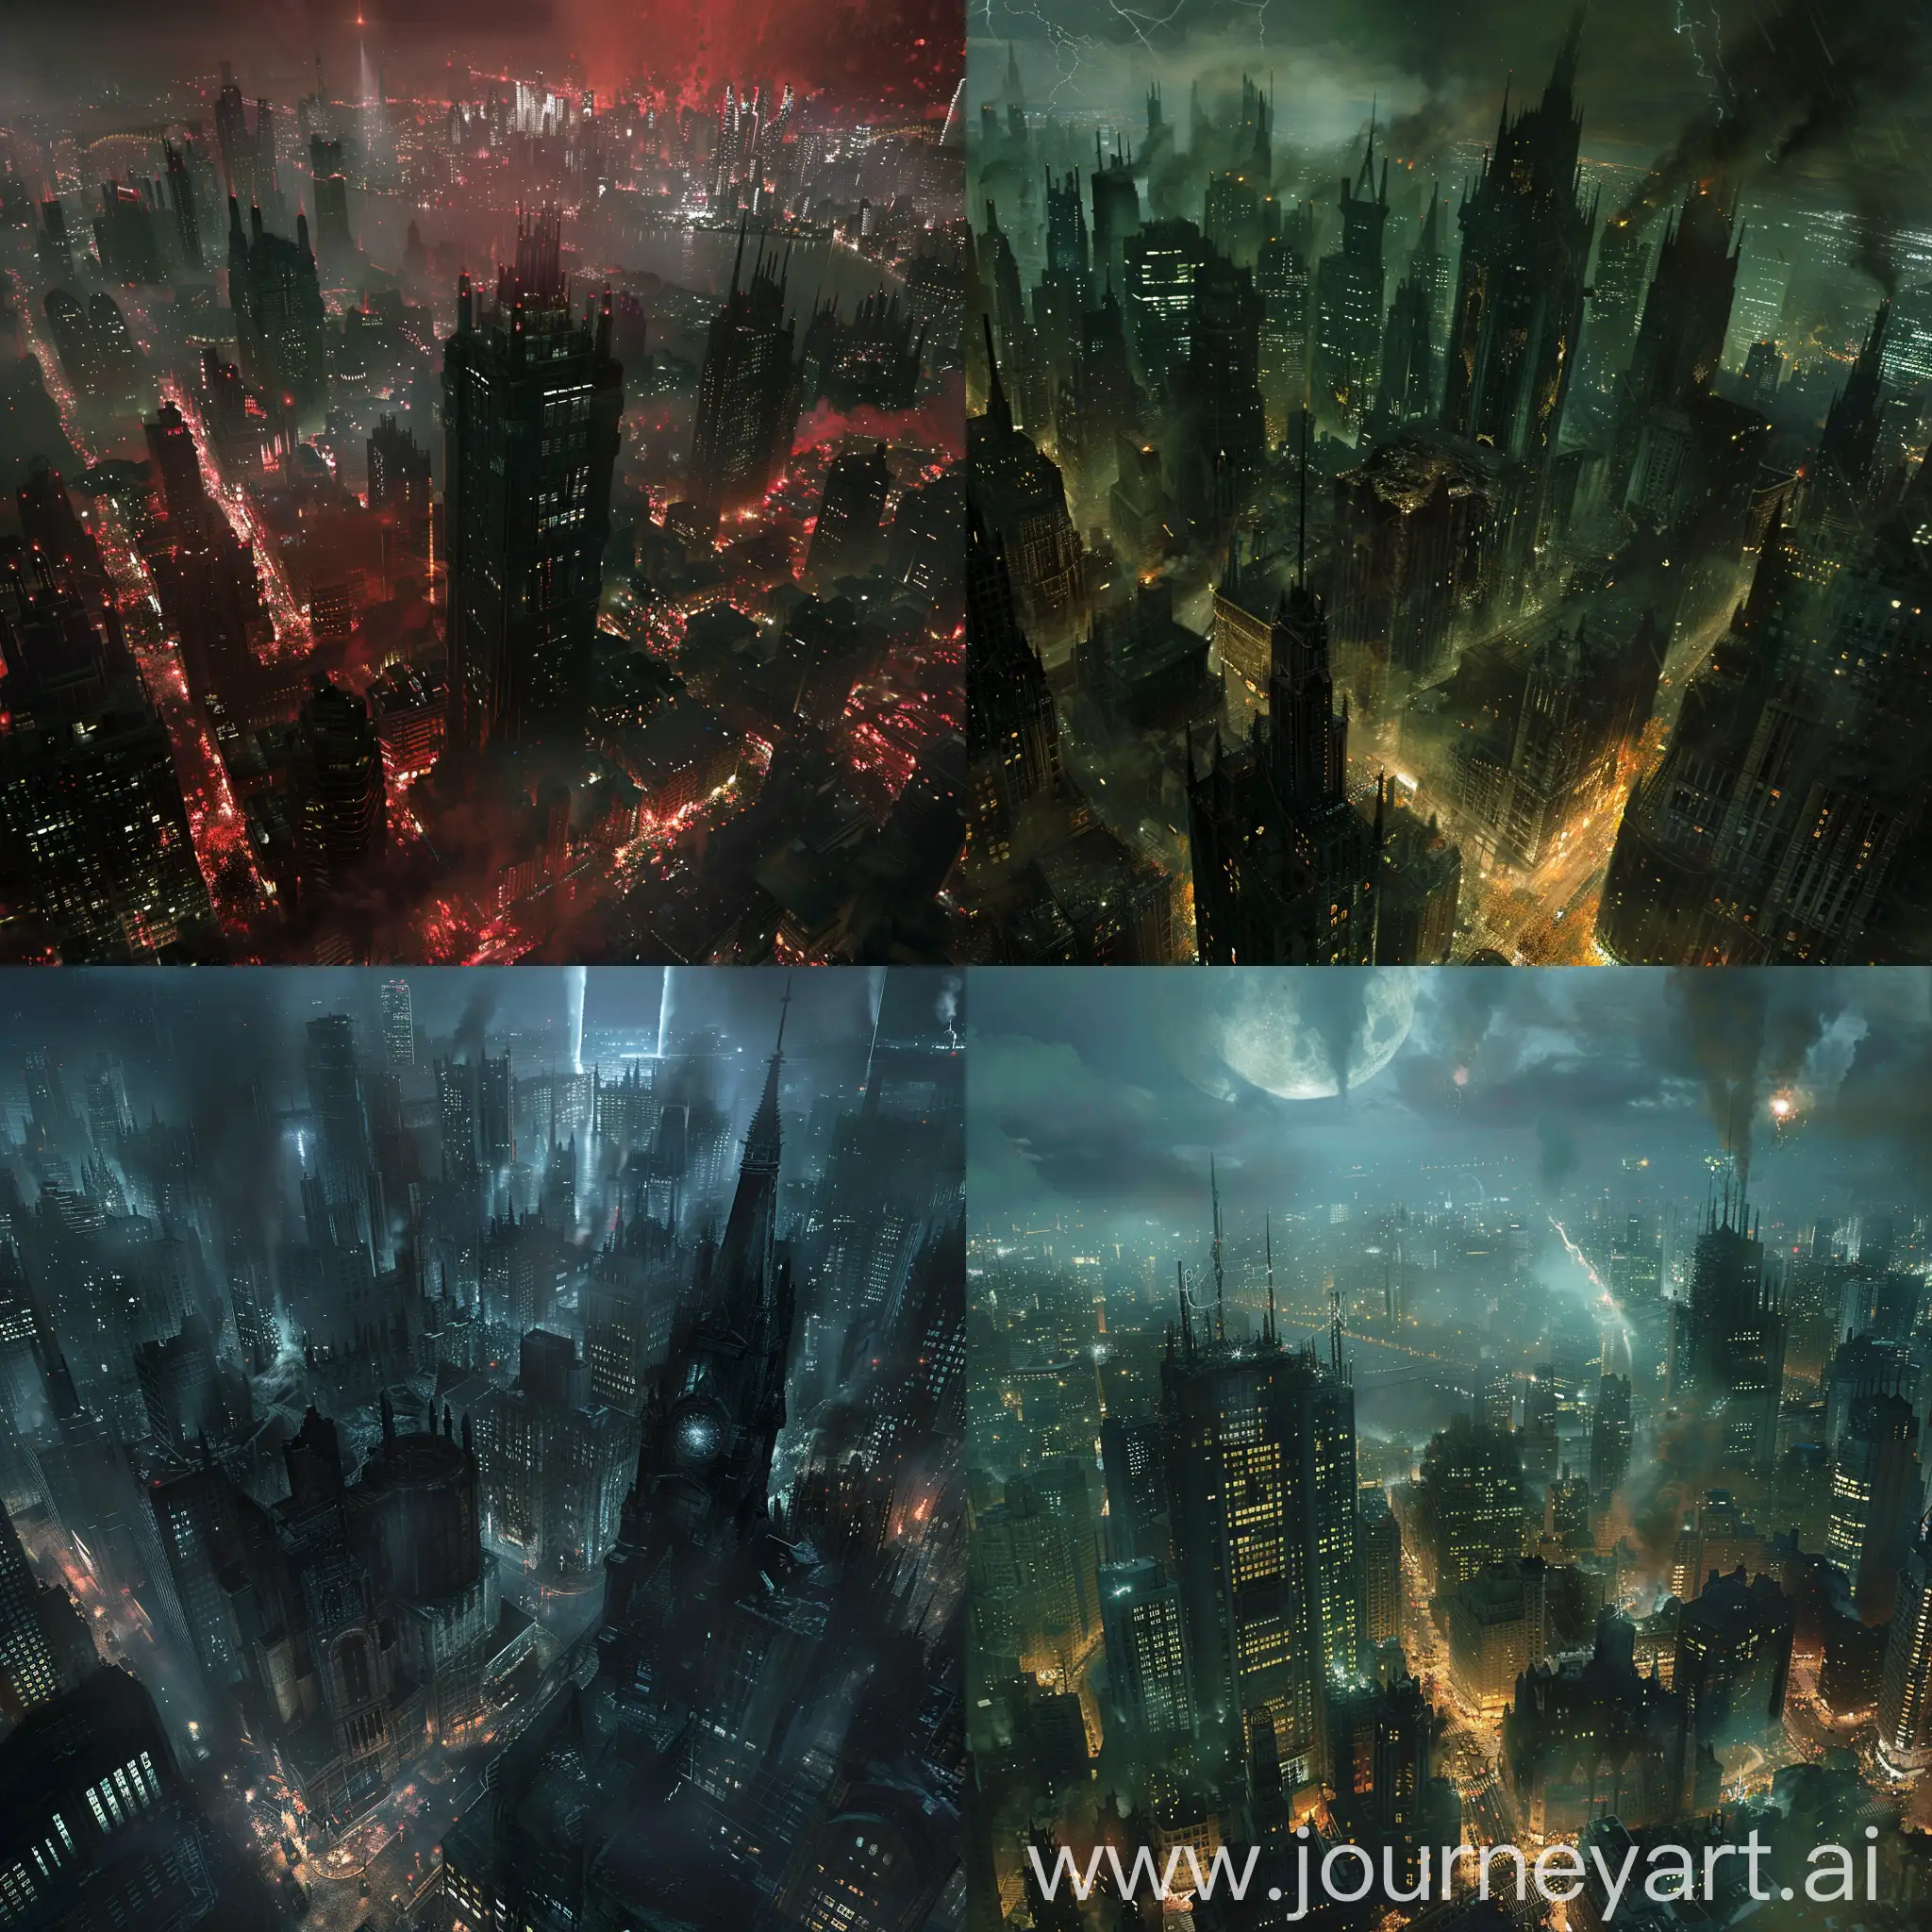 Nighttime-Vampire-Cityscape-with-Quake-Visuals